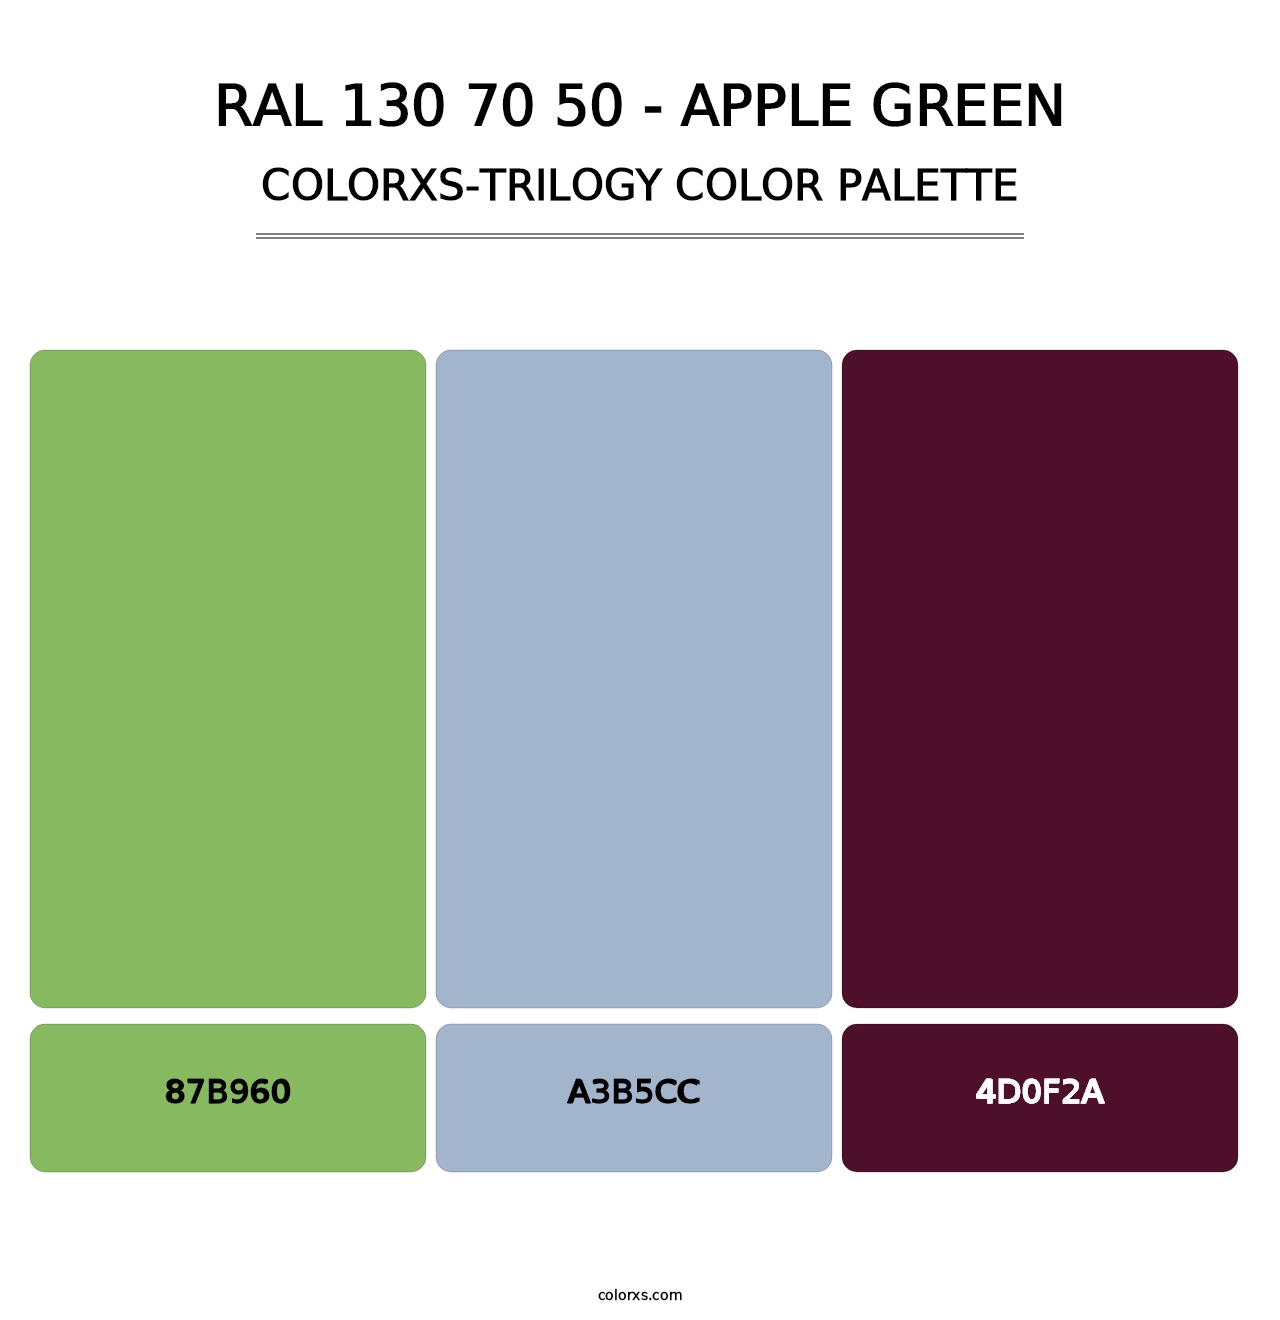 RAL 130 70 50 - Apple Green - Colorxs Trilogy Palette